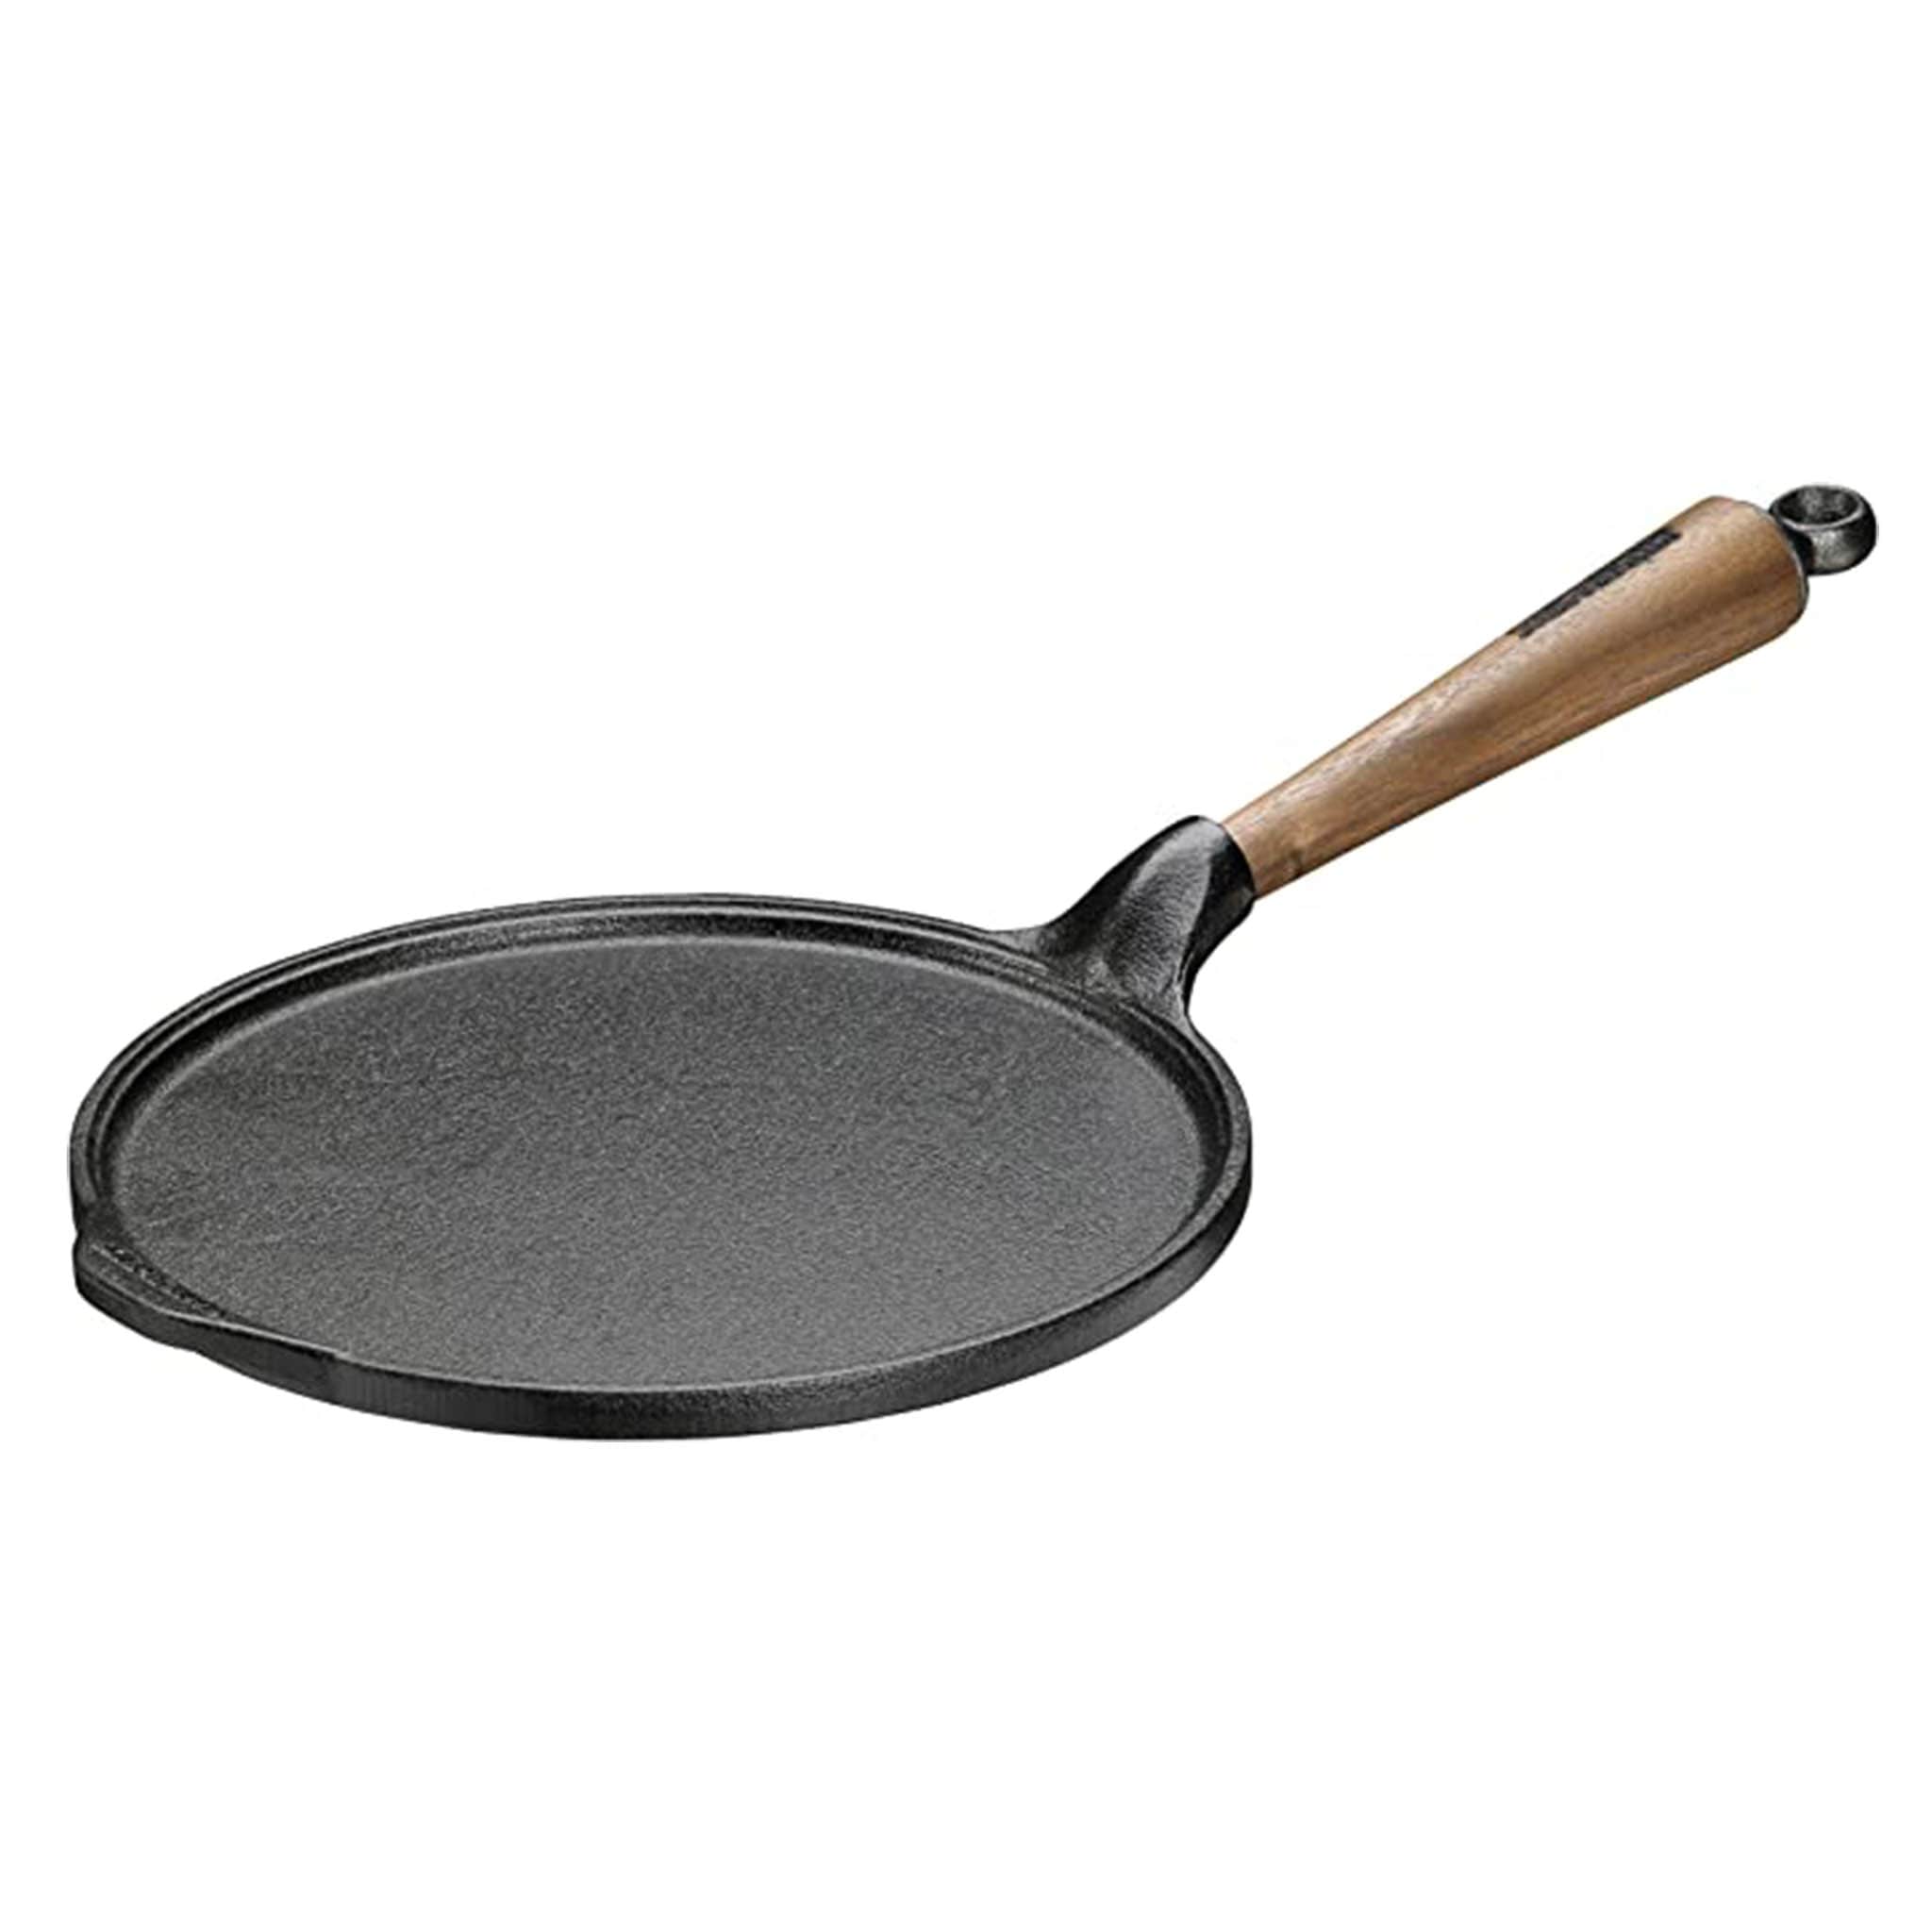 Skeppshult Traditional Cast Iron Pancake Pan, 23cm